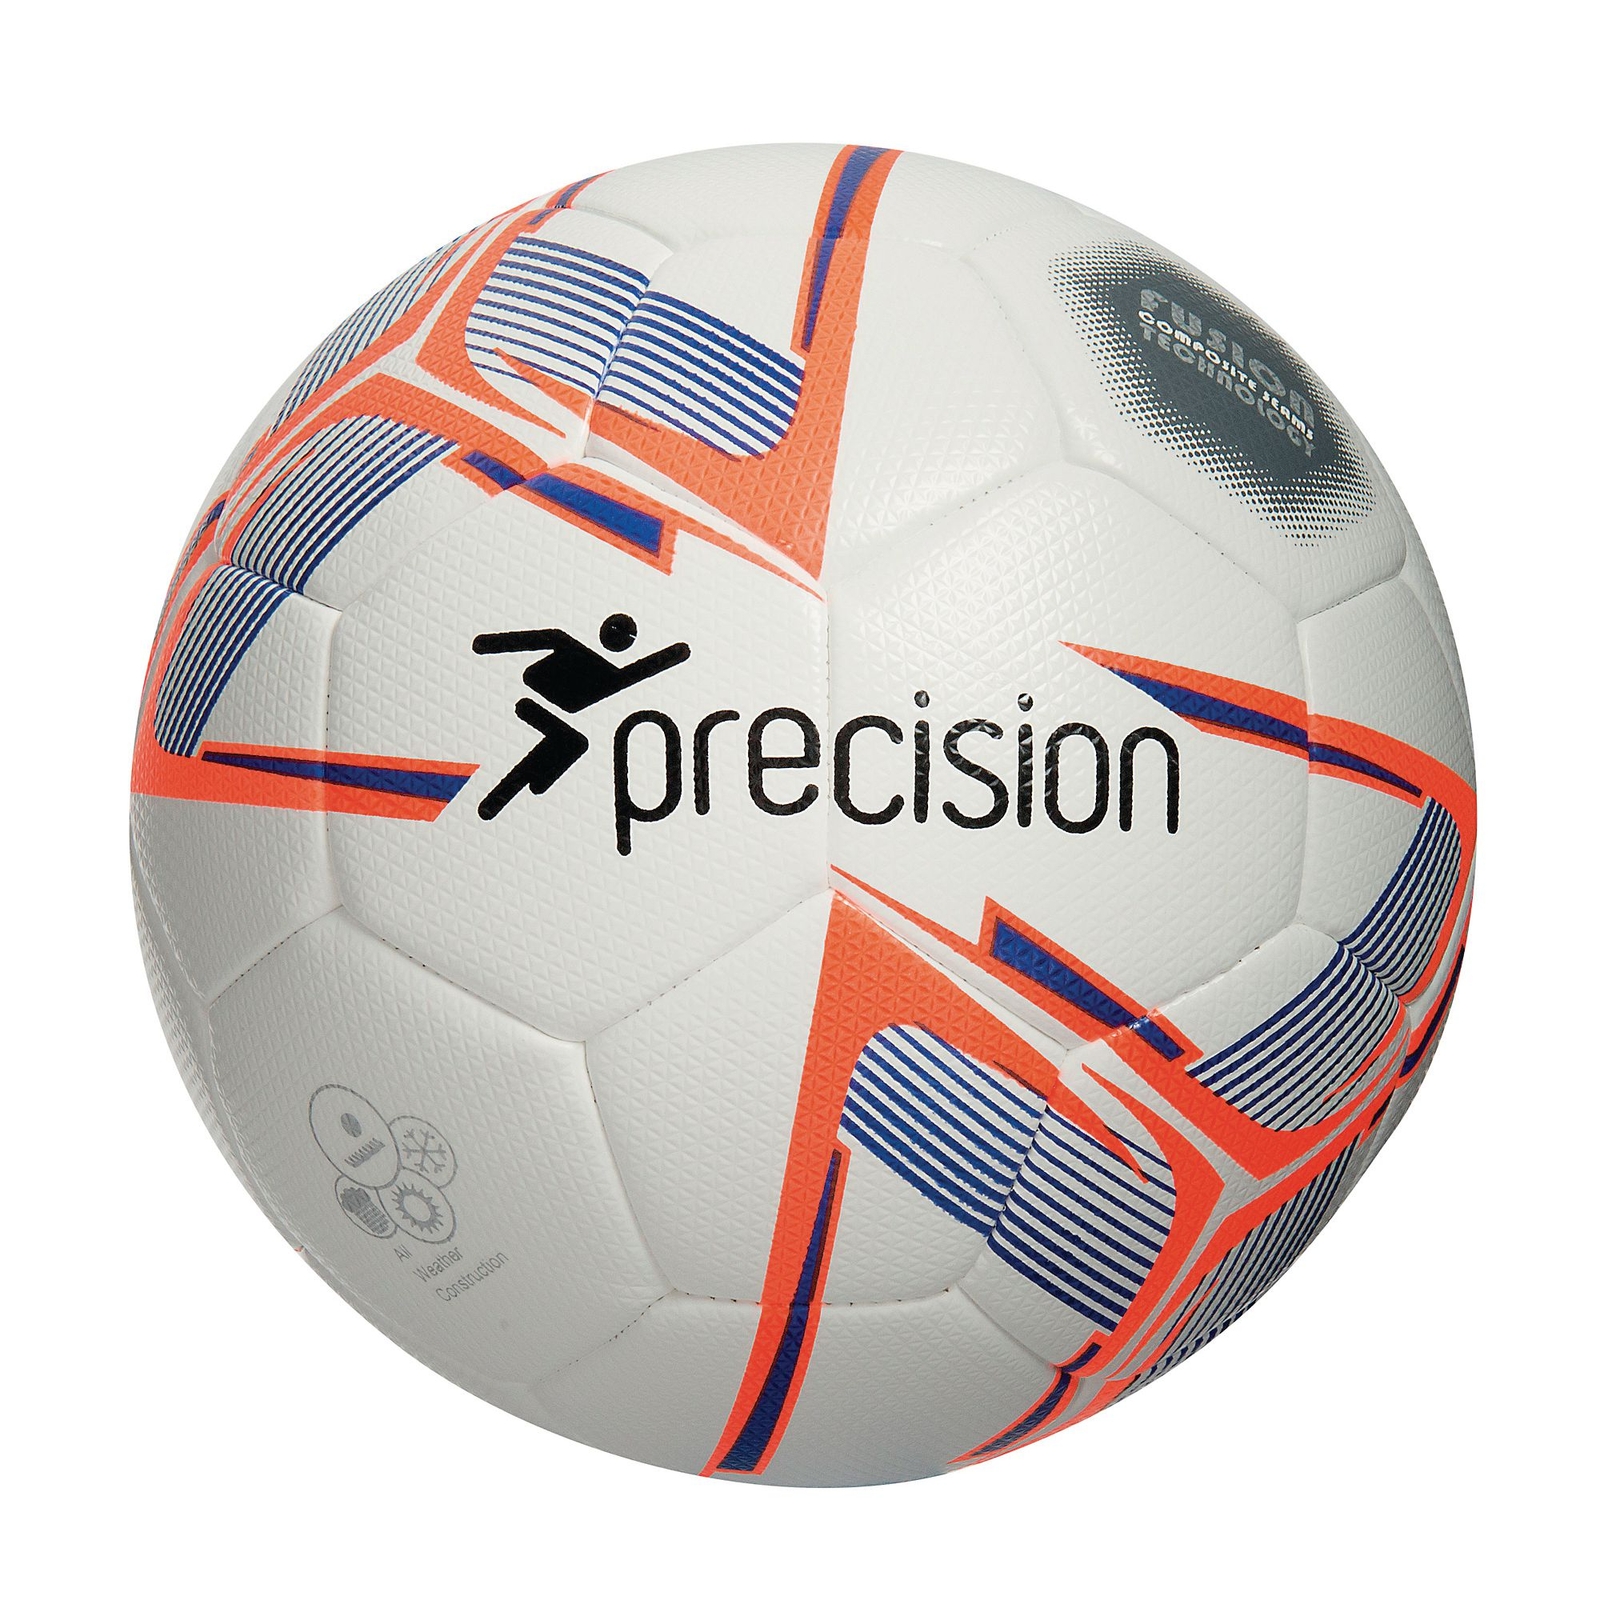 Precision Nueno Match Football, White - Size 4